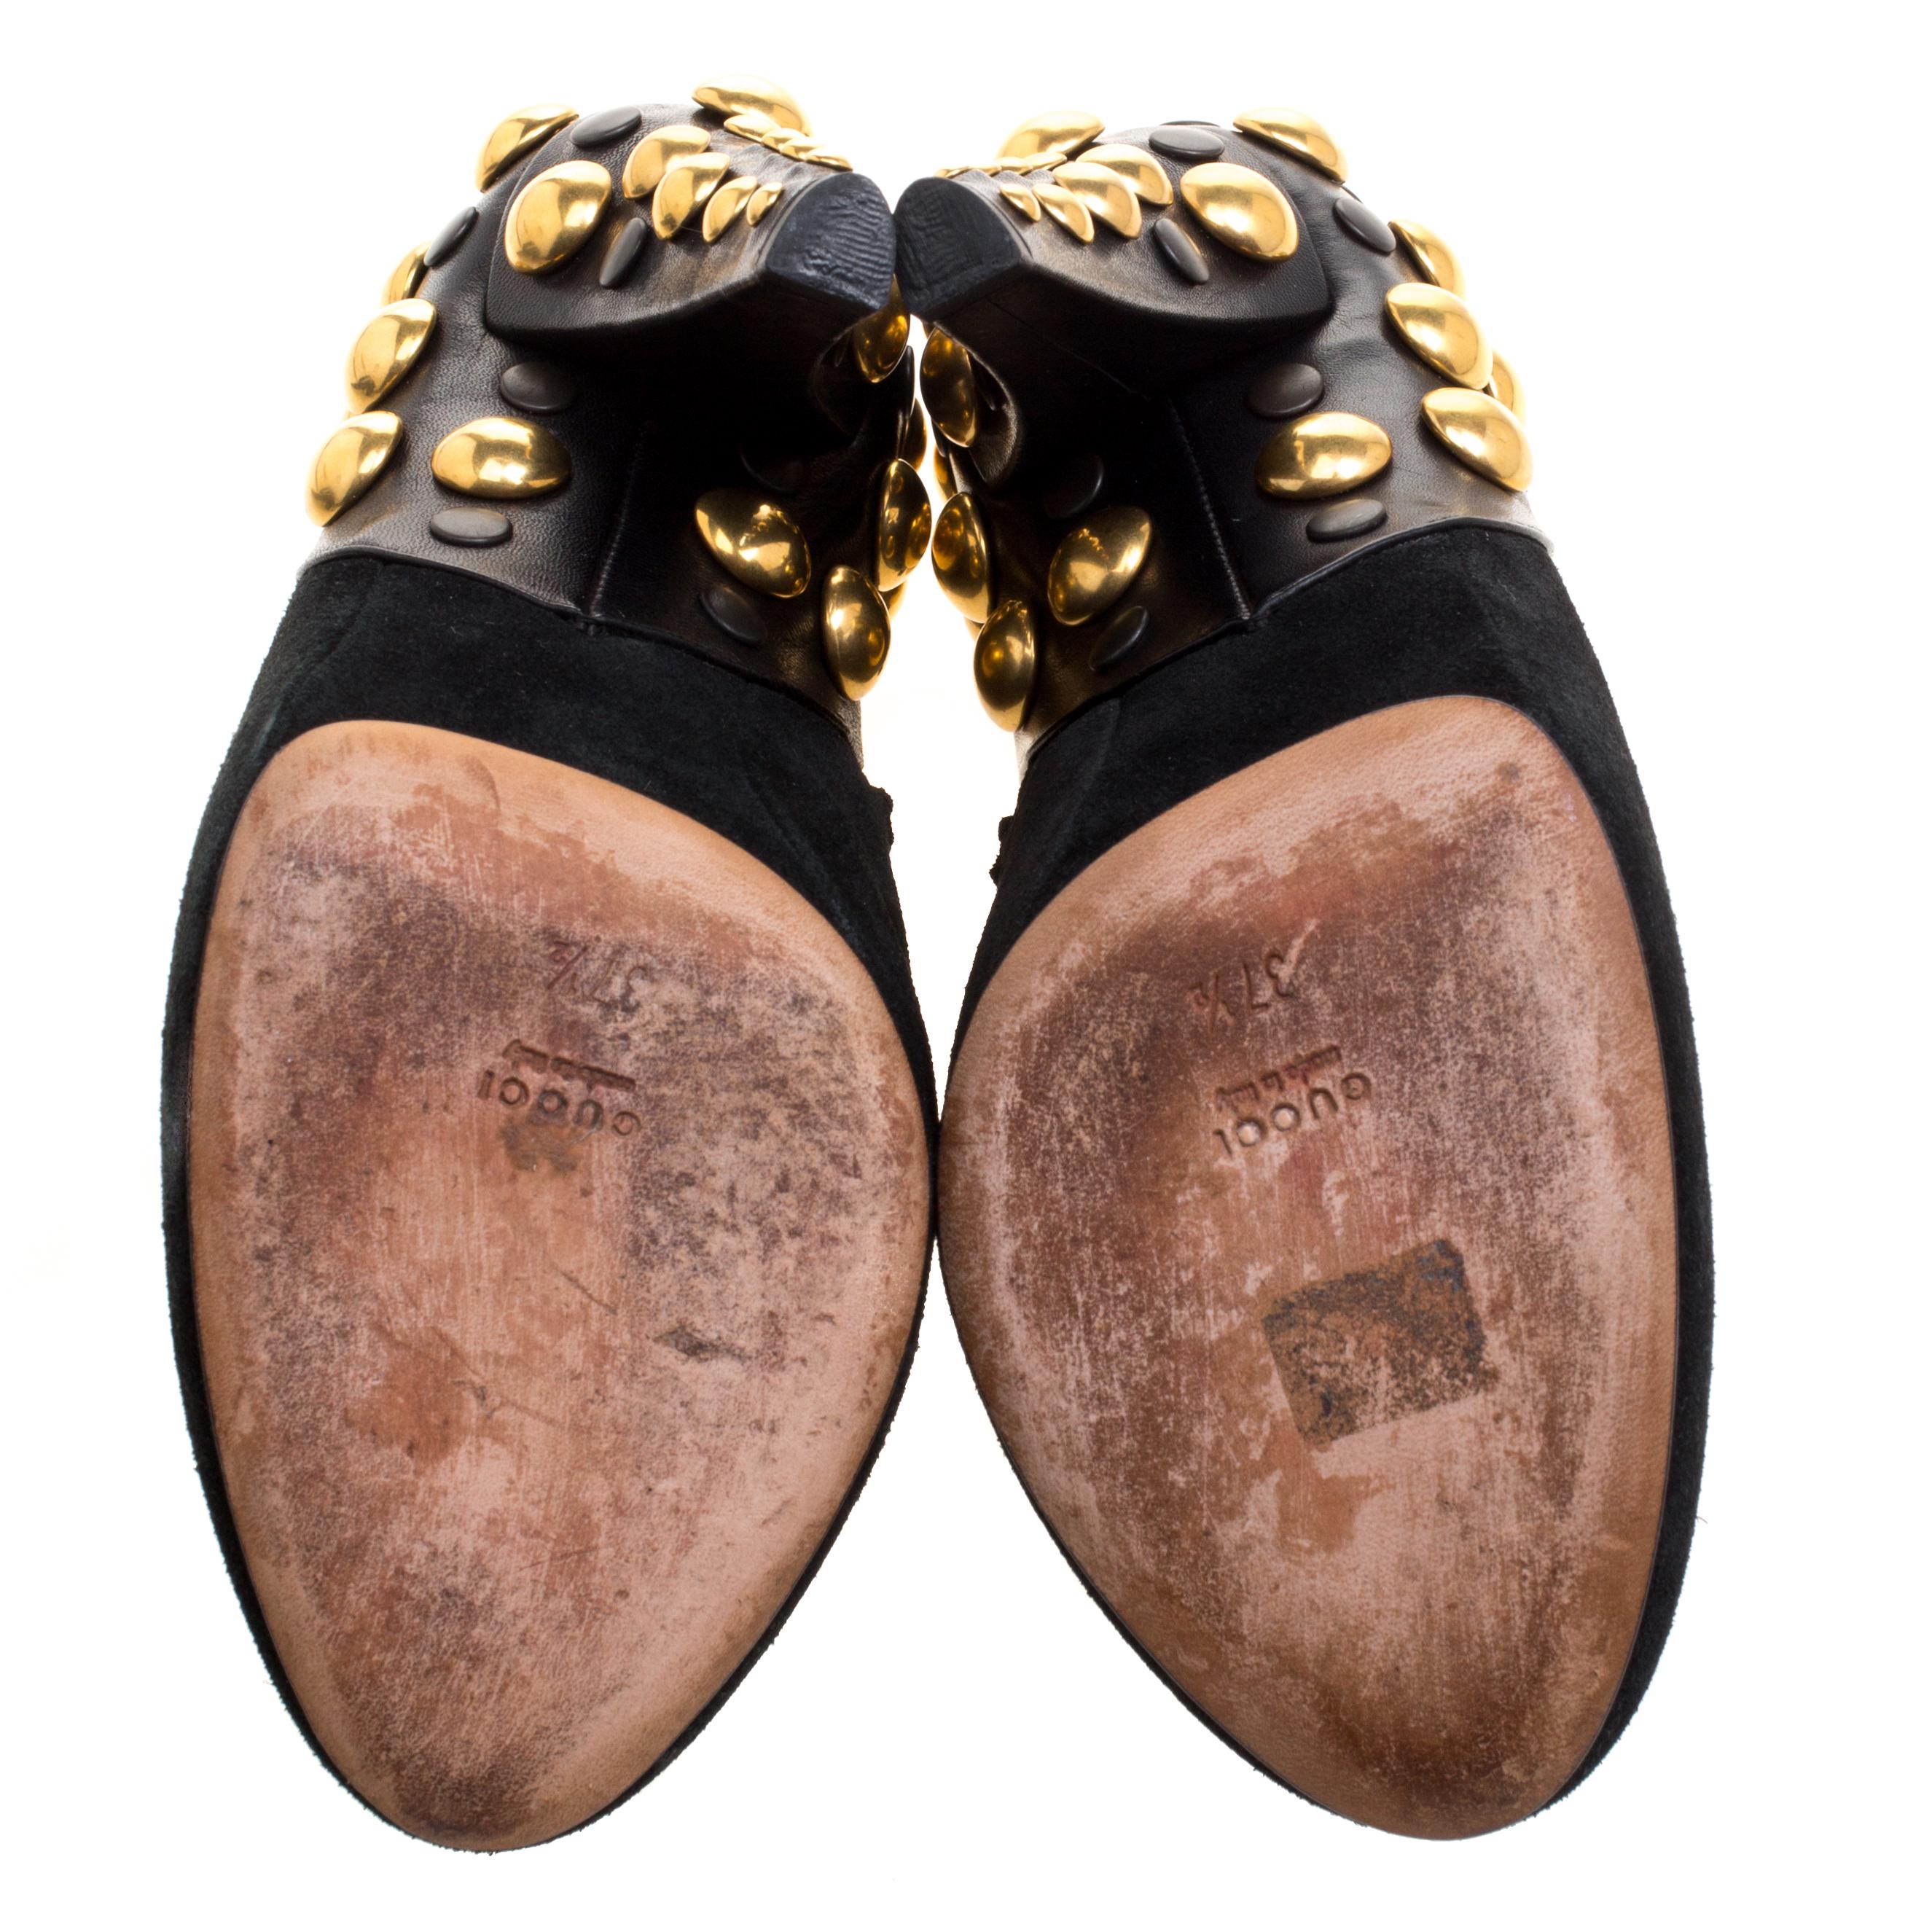 Gucci Black Suede Vintage Babouska Studded Heel Ankle Boots Size 37.5 1